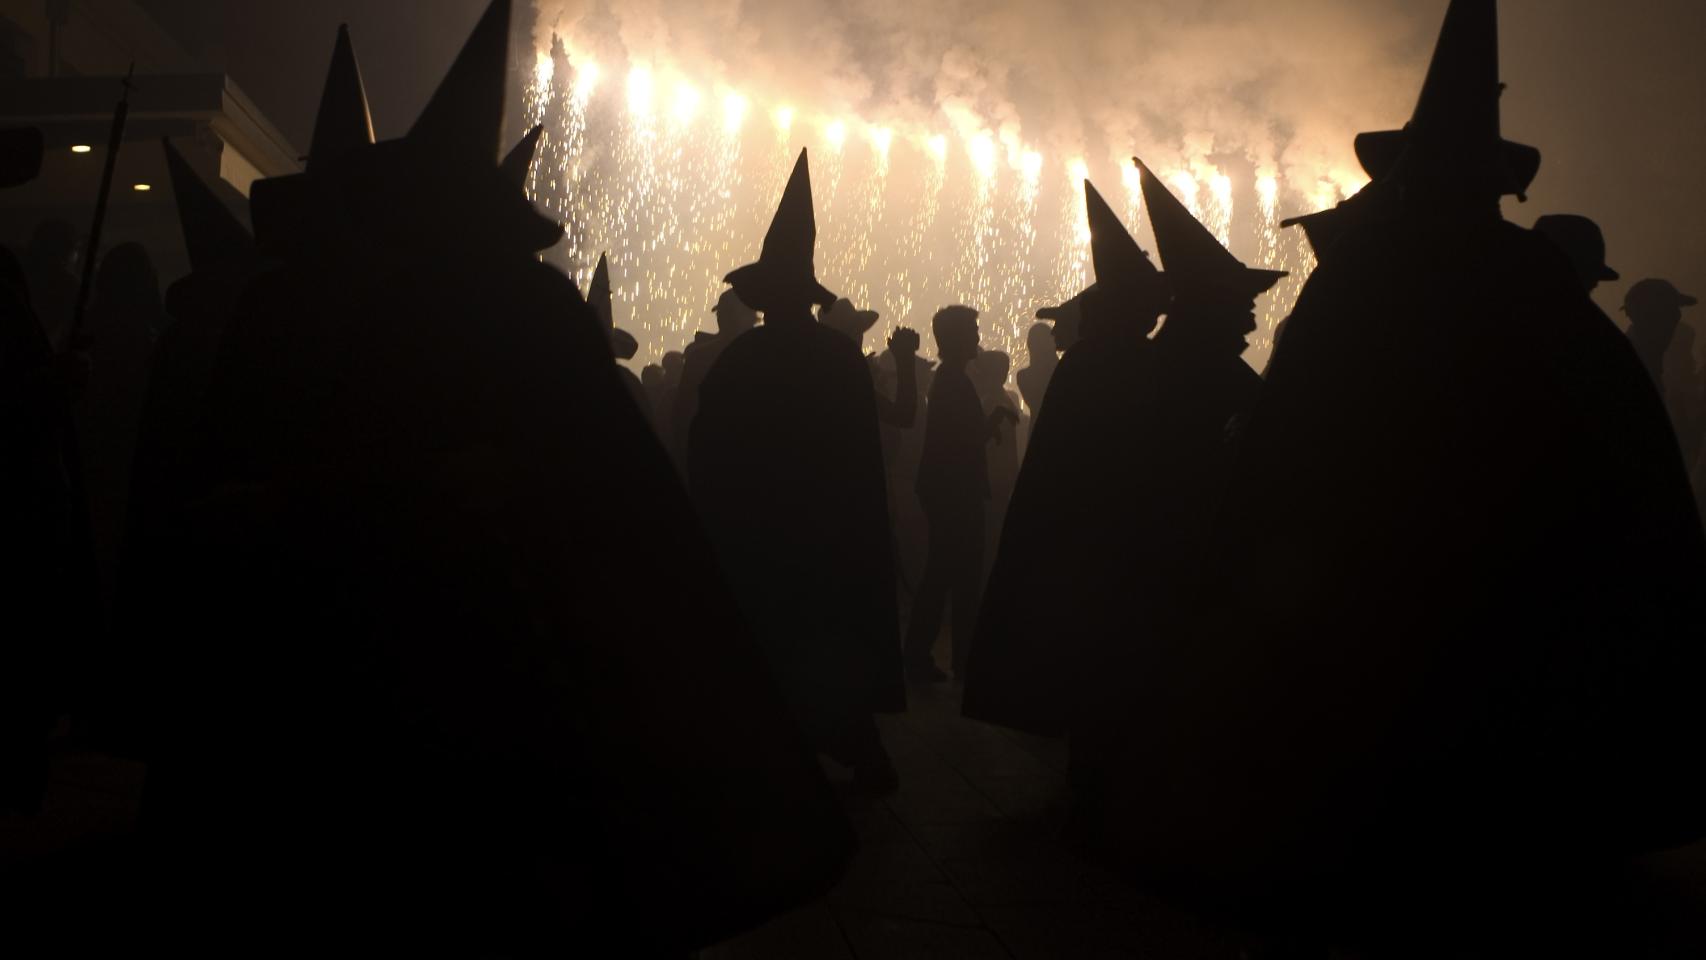 Significado caldero de brujas representa magia rituales